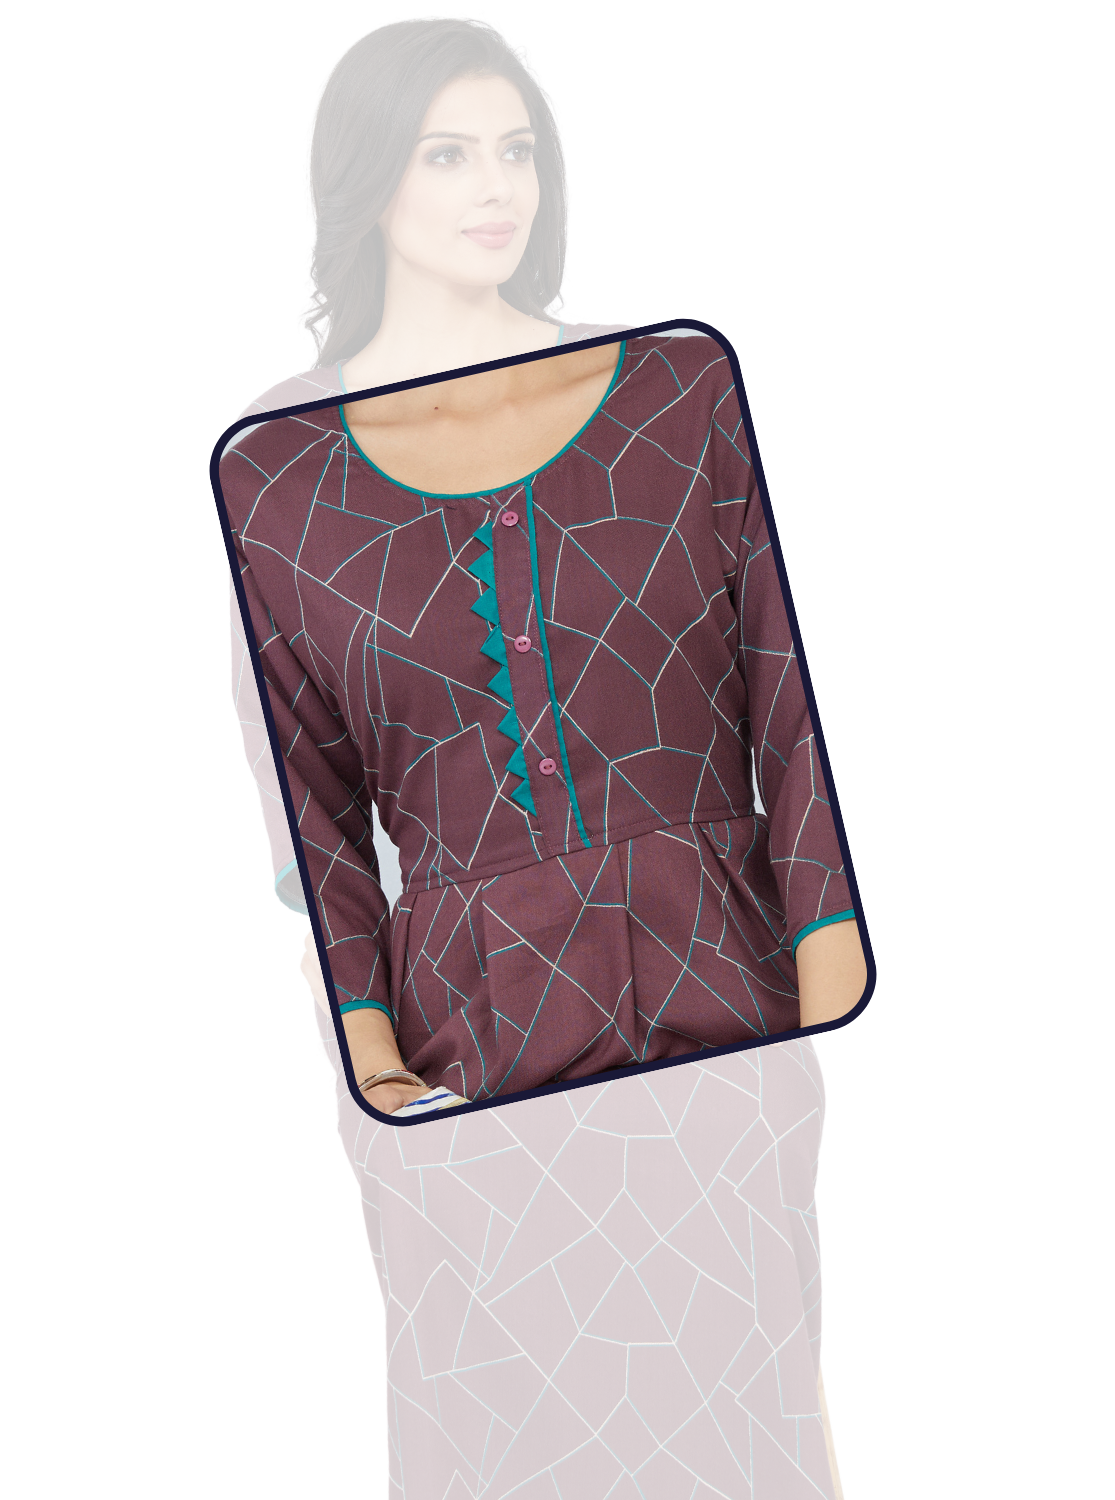 New Arrivals MANGAI Premium Alpine KURTI Style | Beautiful Stylish KURTI Model | Side Pocket | 3/4 Sleeve | Perfect Nightwear Collection's for Trendy Women's